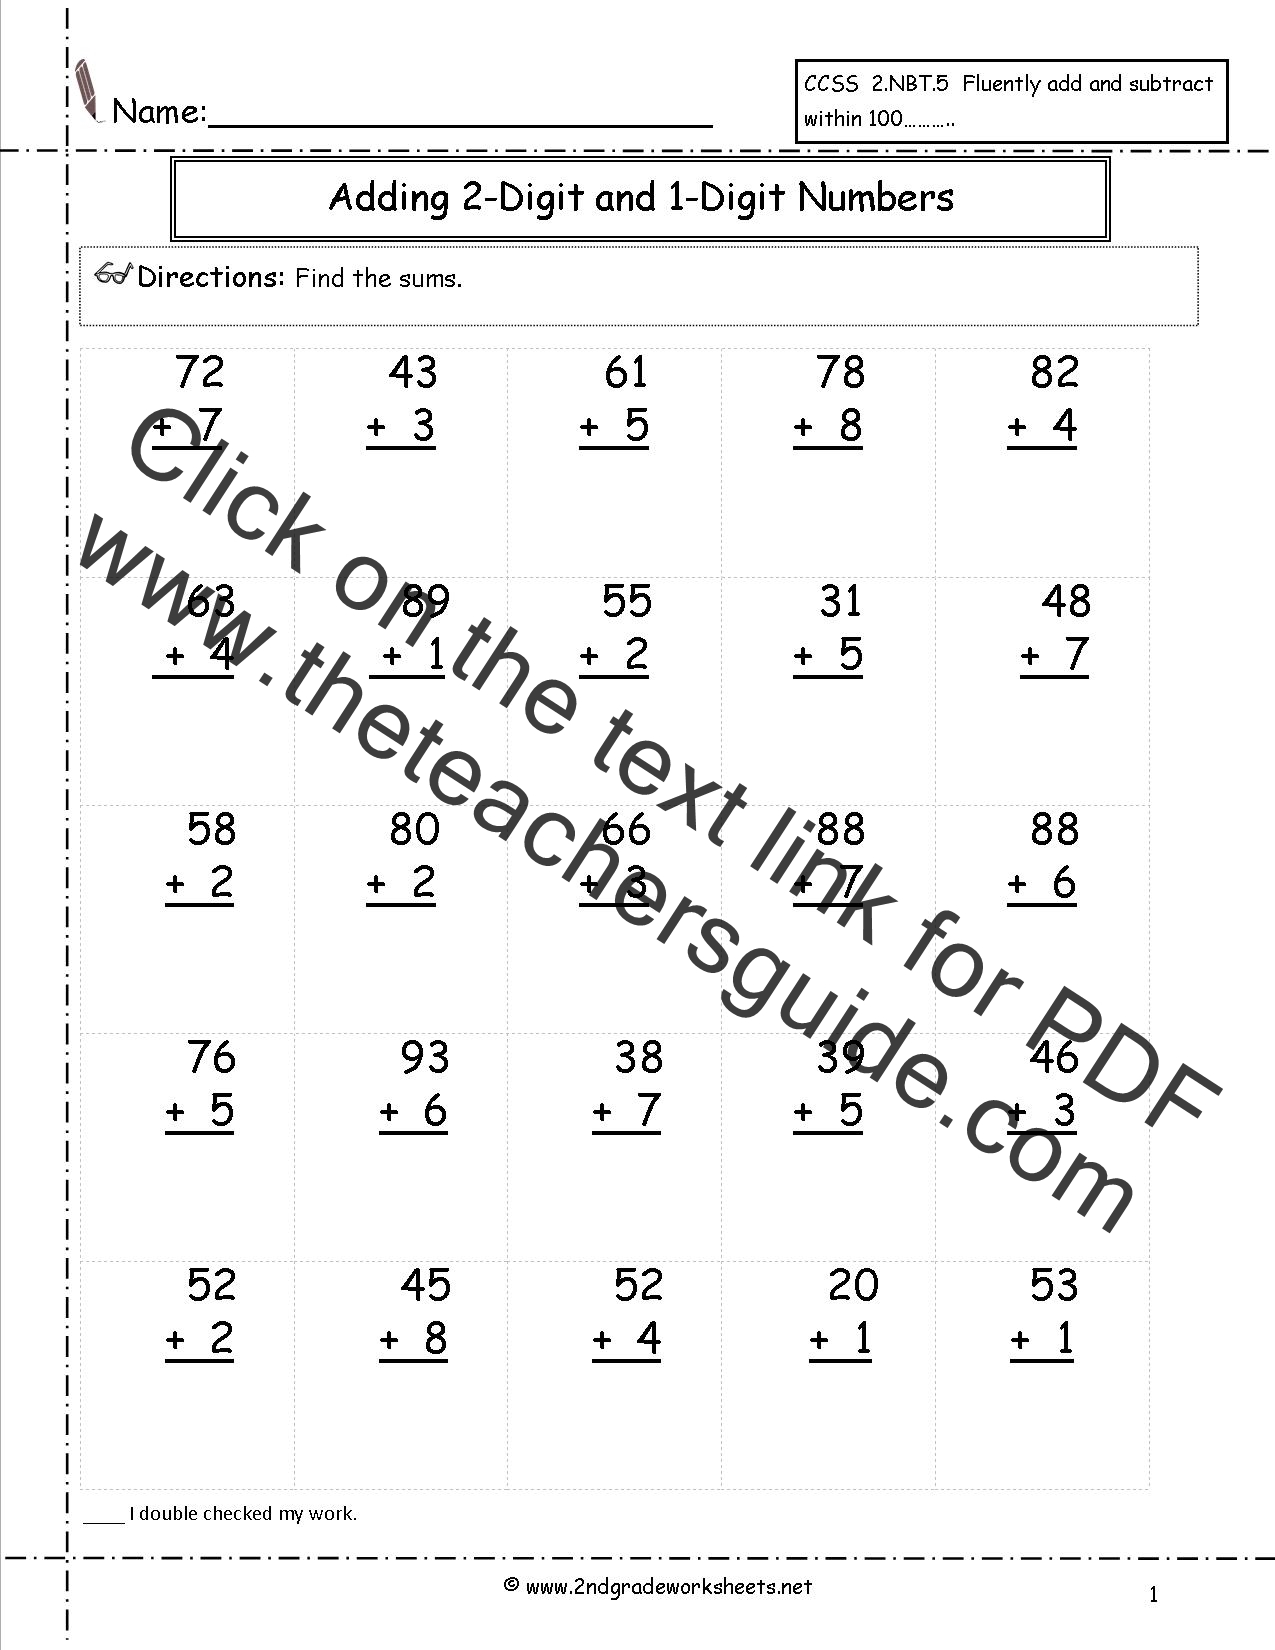 printable-double-digit-addition-worksheet